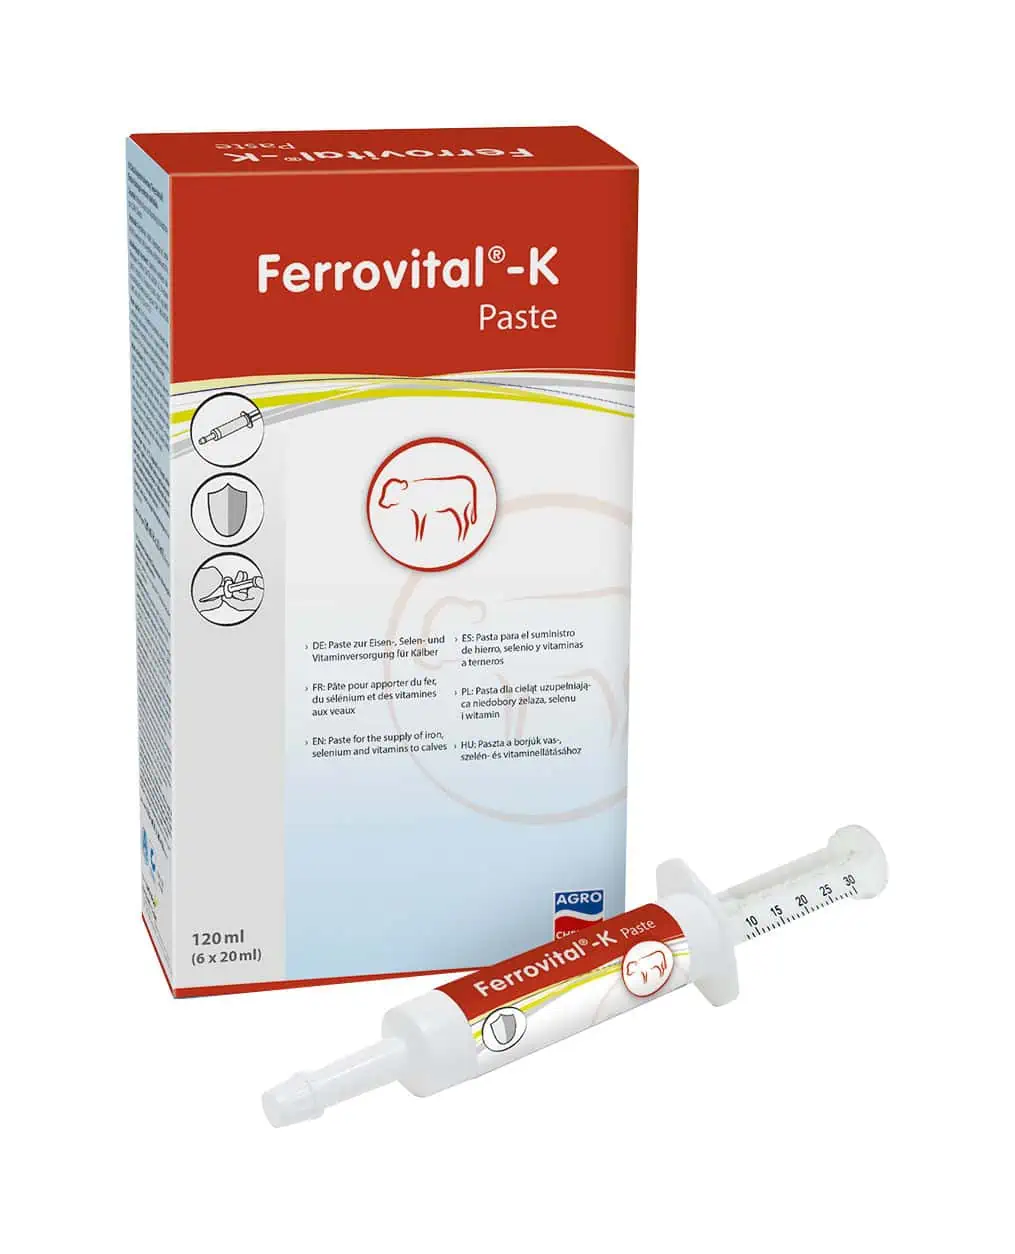 FERROVITAL-K iron paste 6 x 20 ml injectors